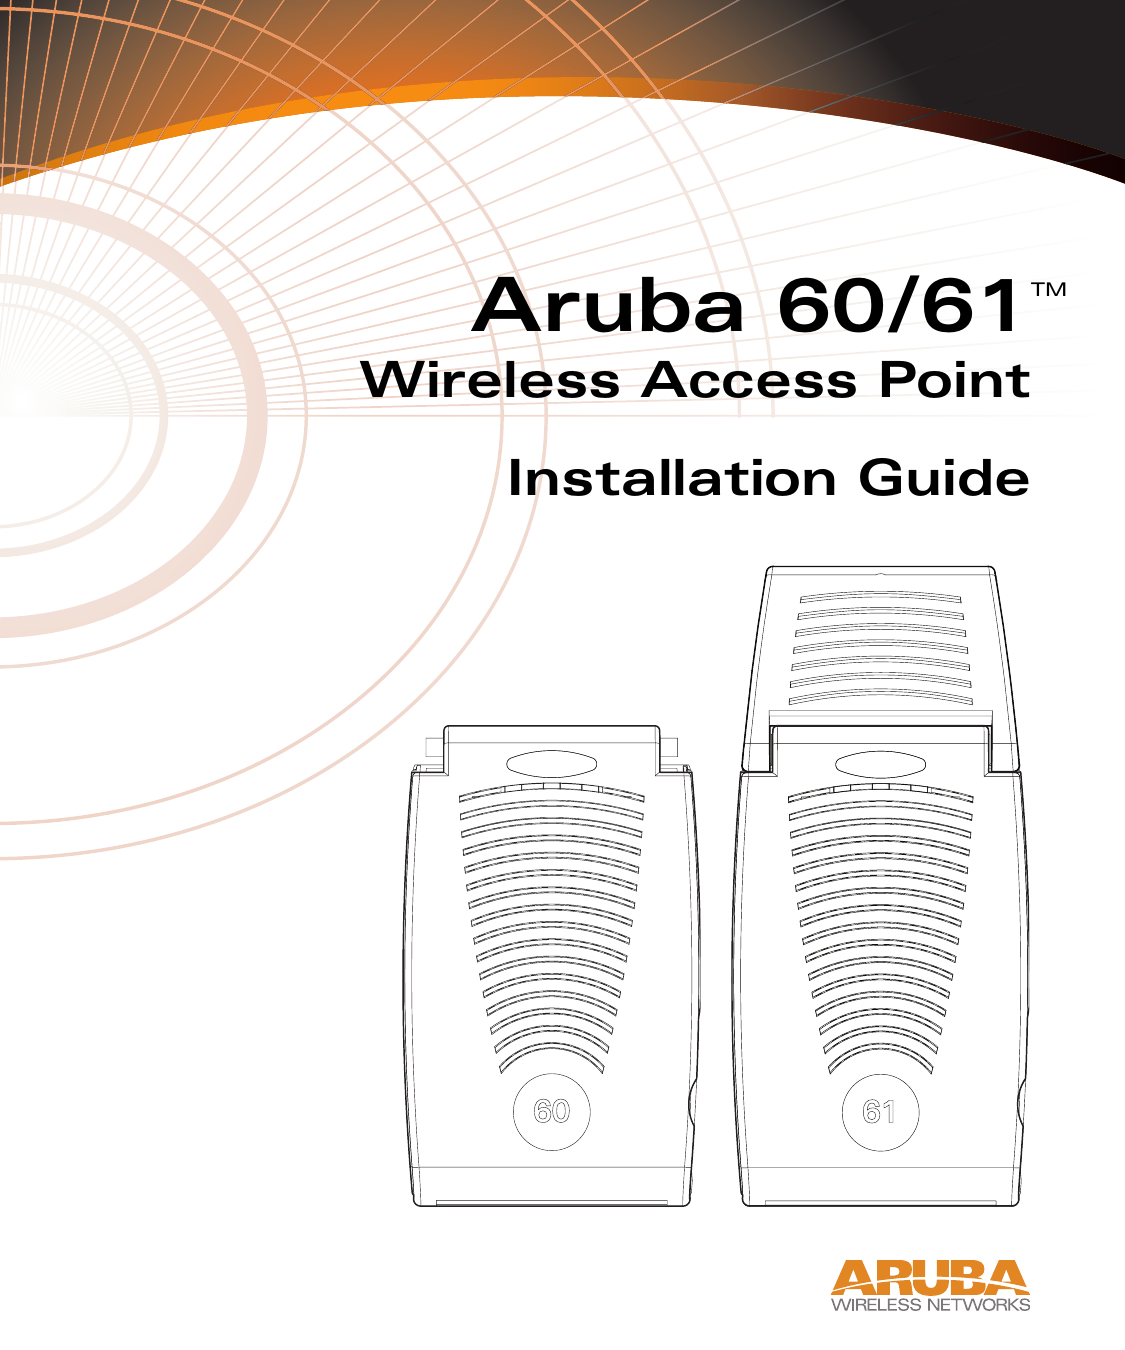 Aruba 60/61Wireless Access PointInstallation GuideTM6061